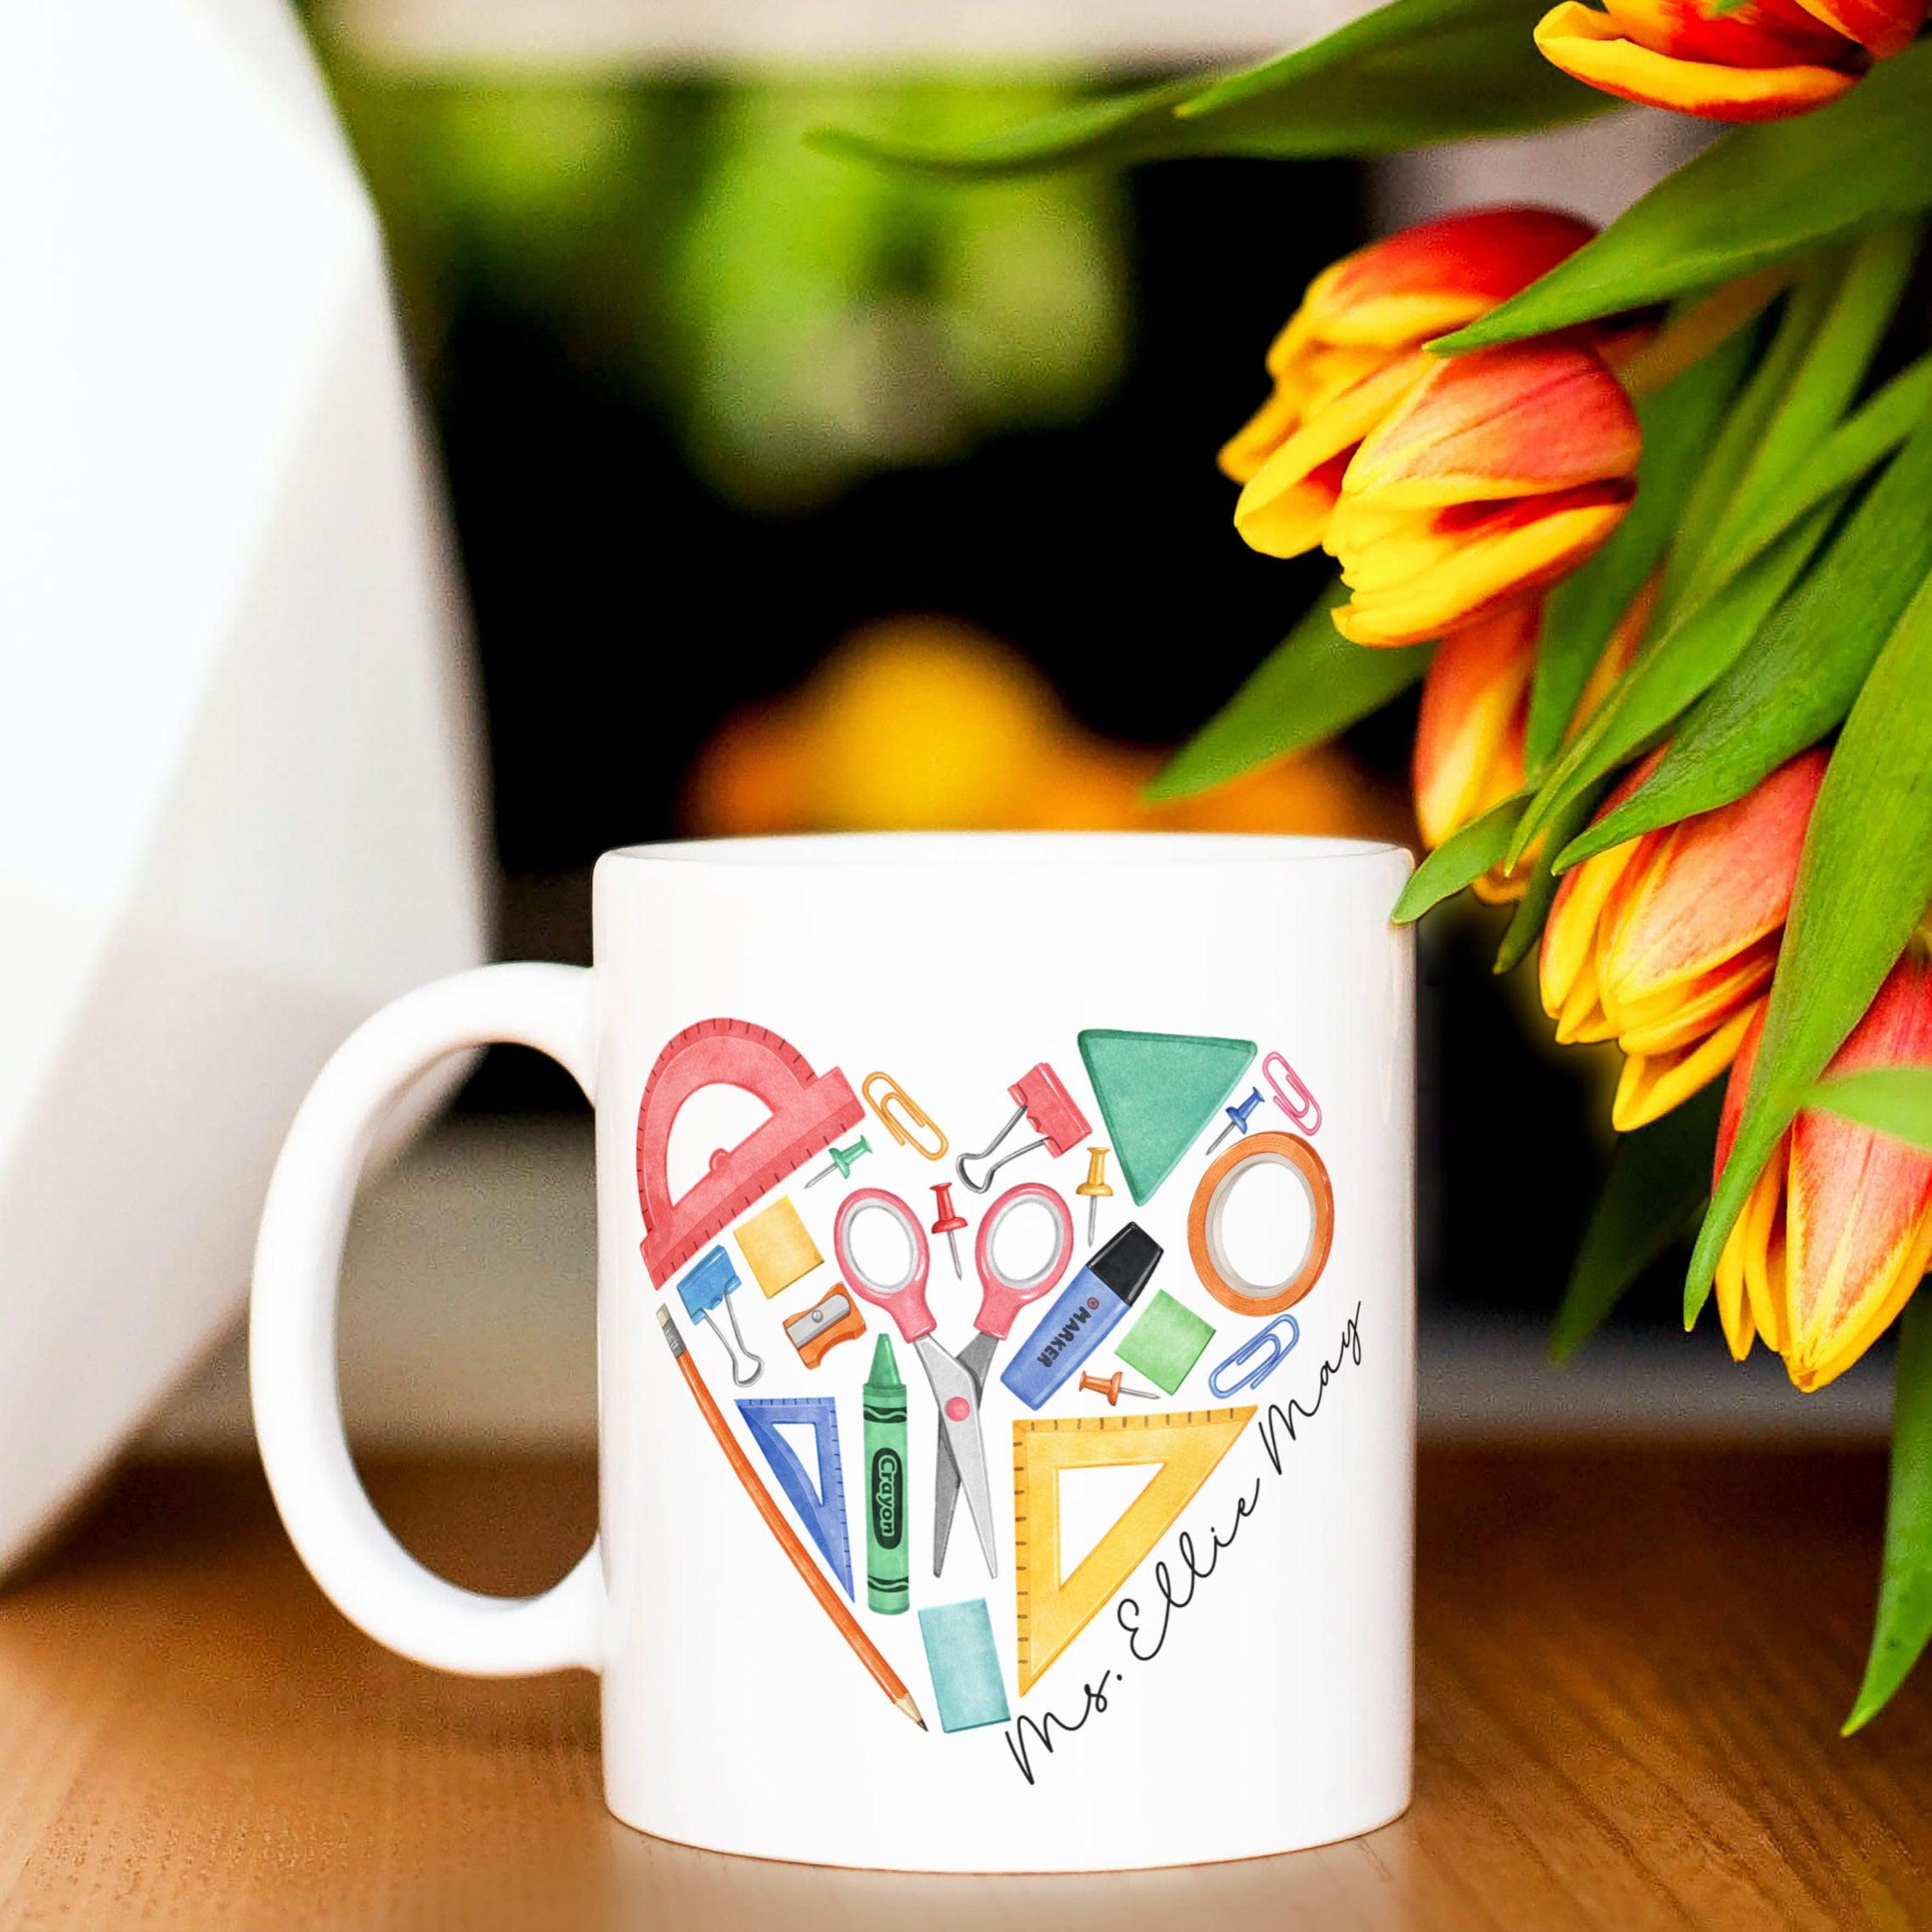 Teacher Cup for End of Year Gift - Personalized Teacher Mug from Child - Teacher Coffee Cup from Student -  Preschool Heart Teacher Mug